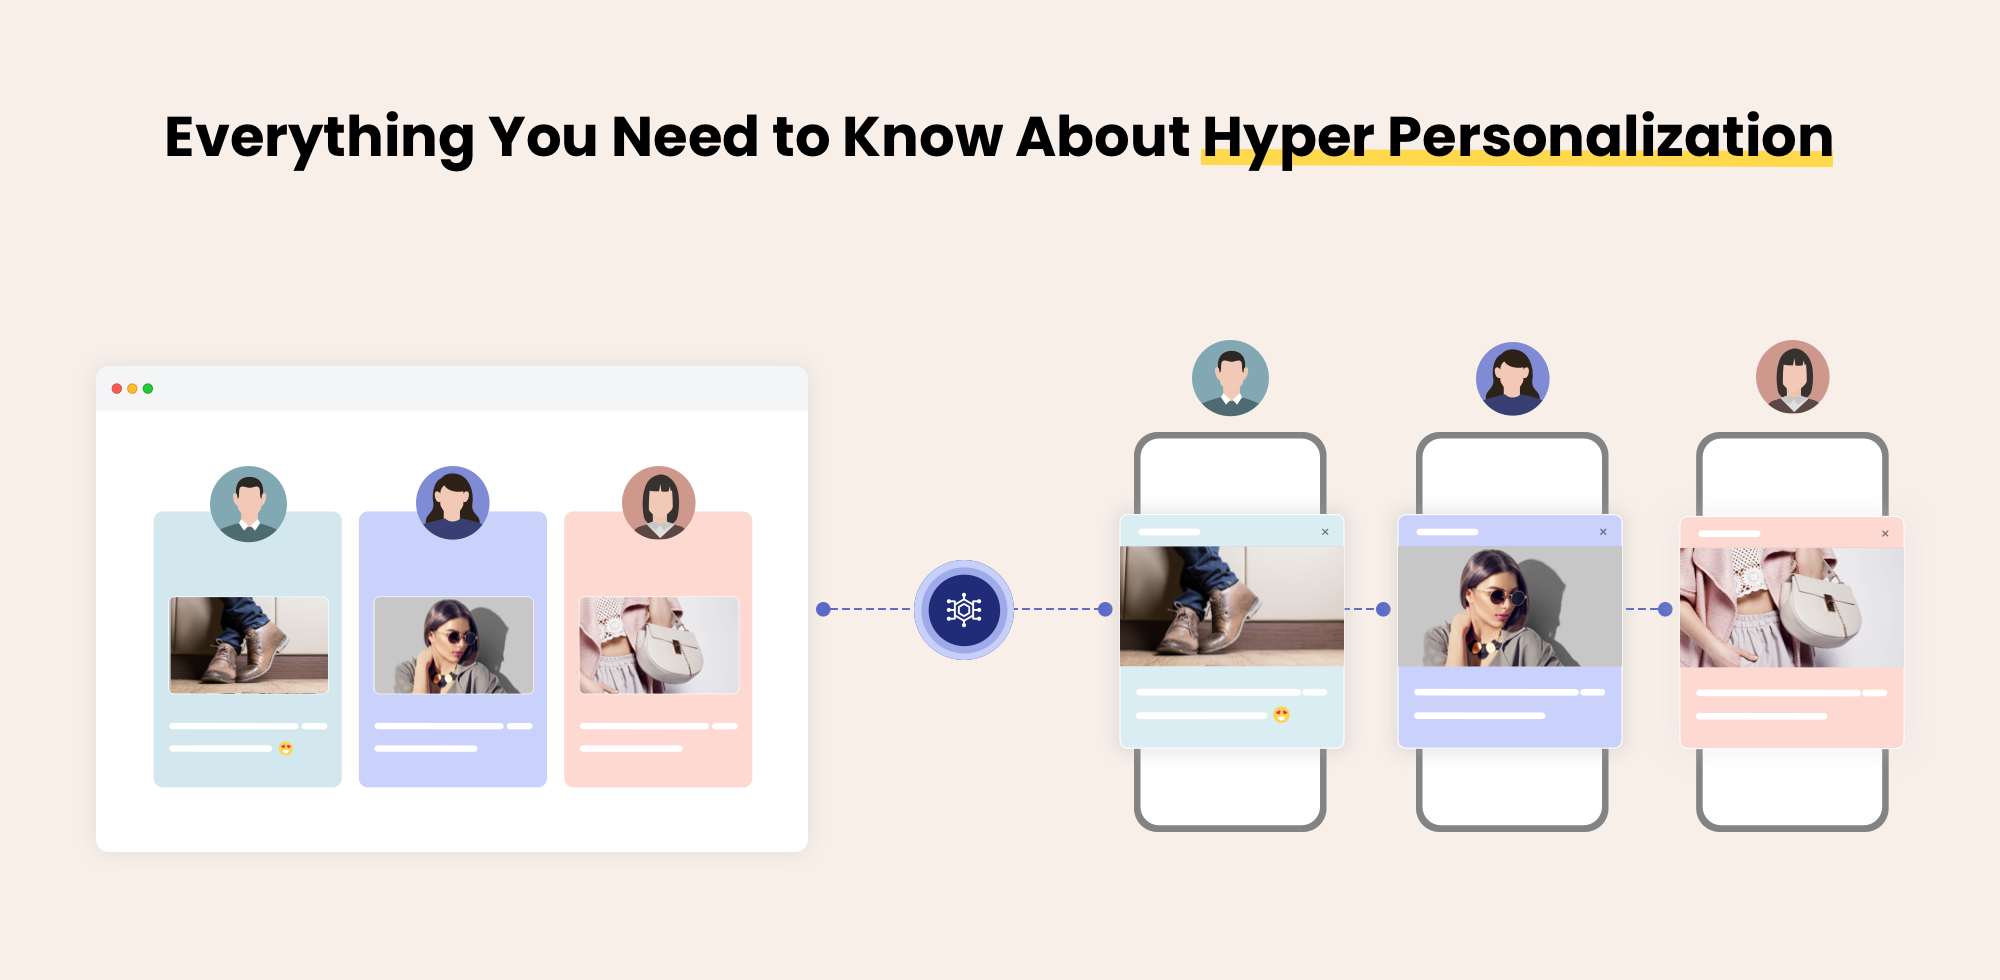 Hyper Personalization as a concept broken down.